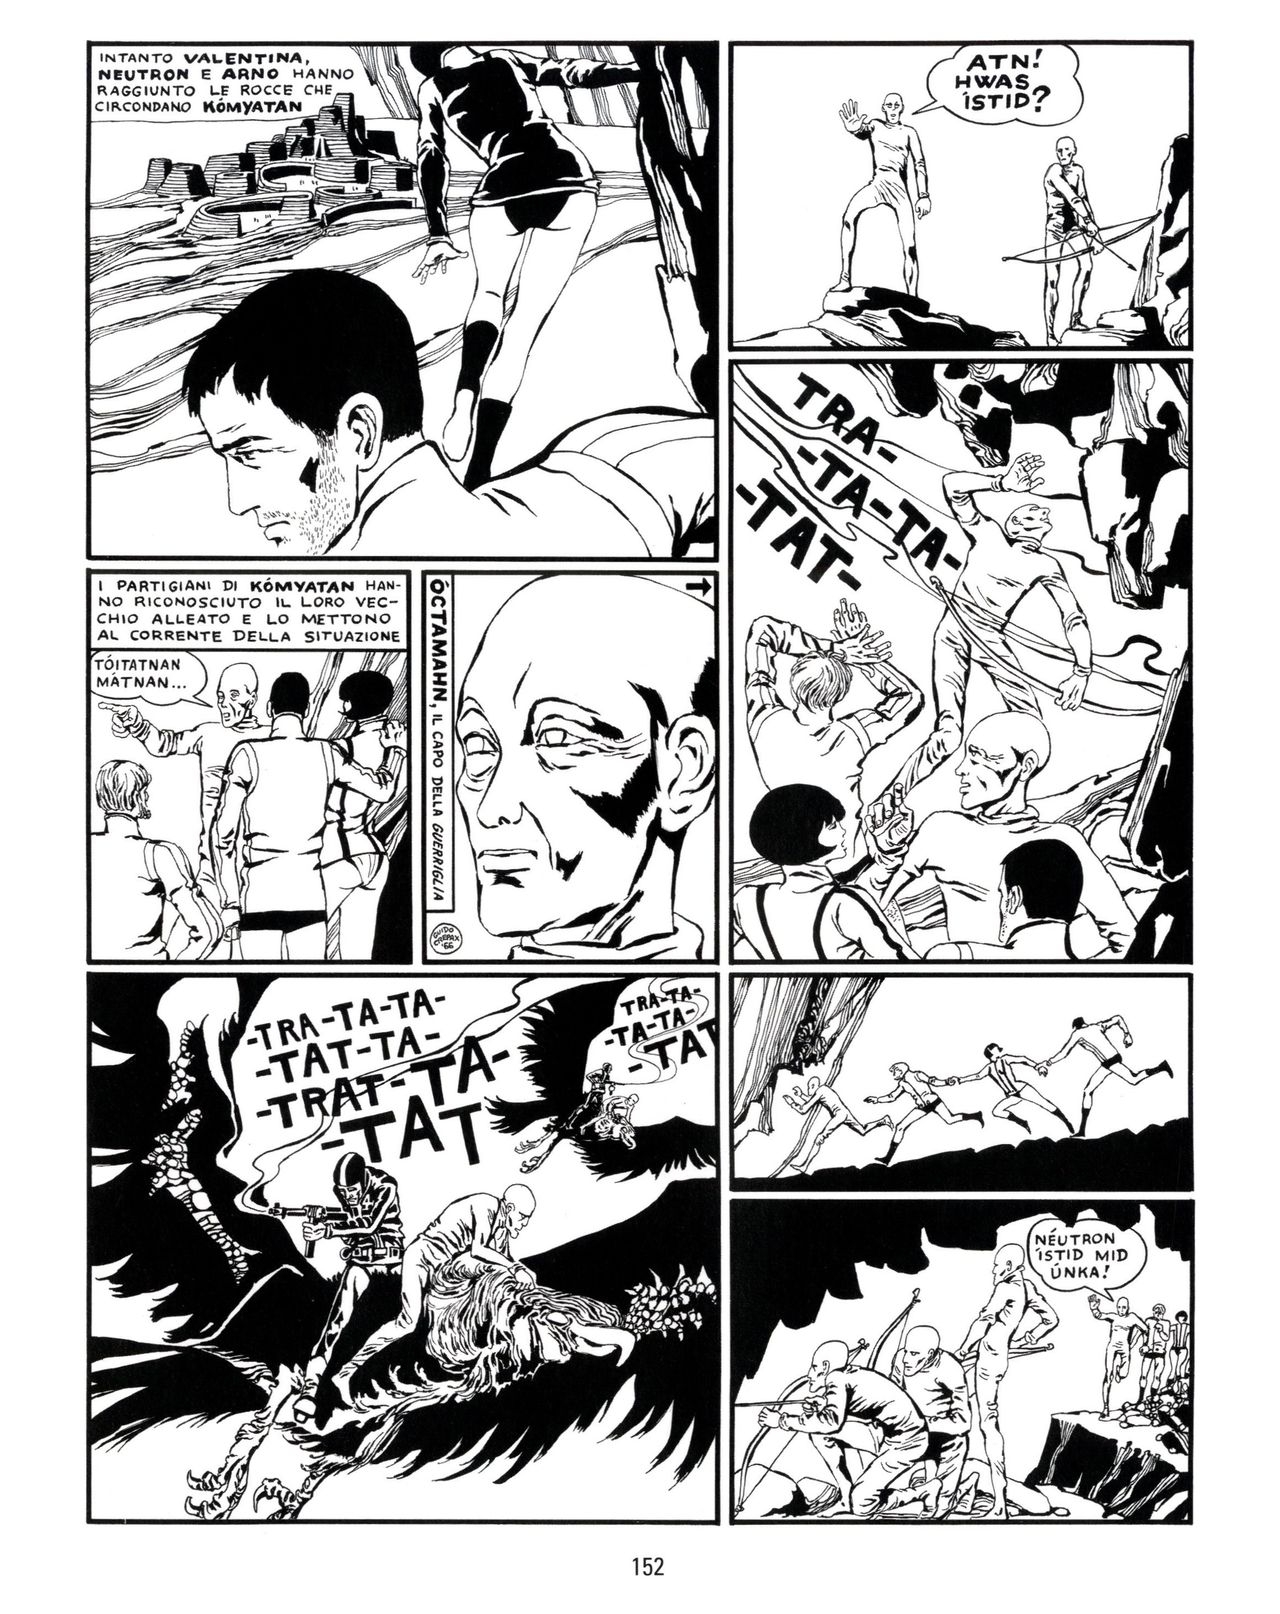 [Guido Crepax] Erotica Fumetti #25 : L'ascesa dei sotterranei : I cavalieri ciechi [Italian] 153